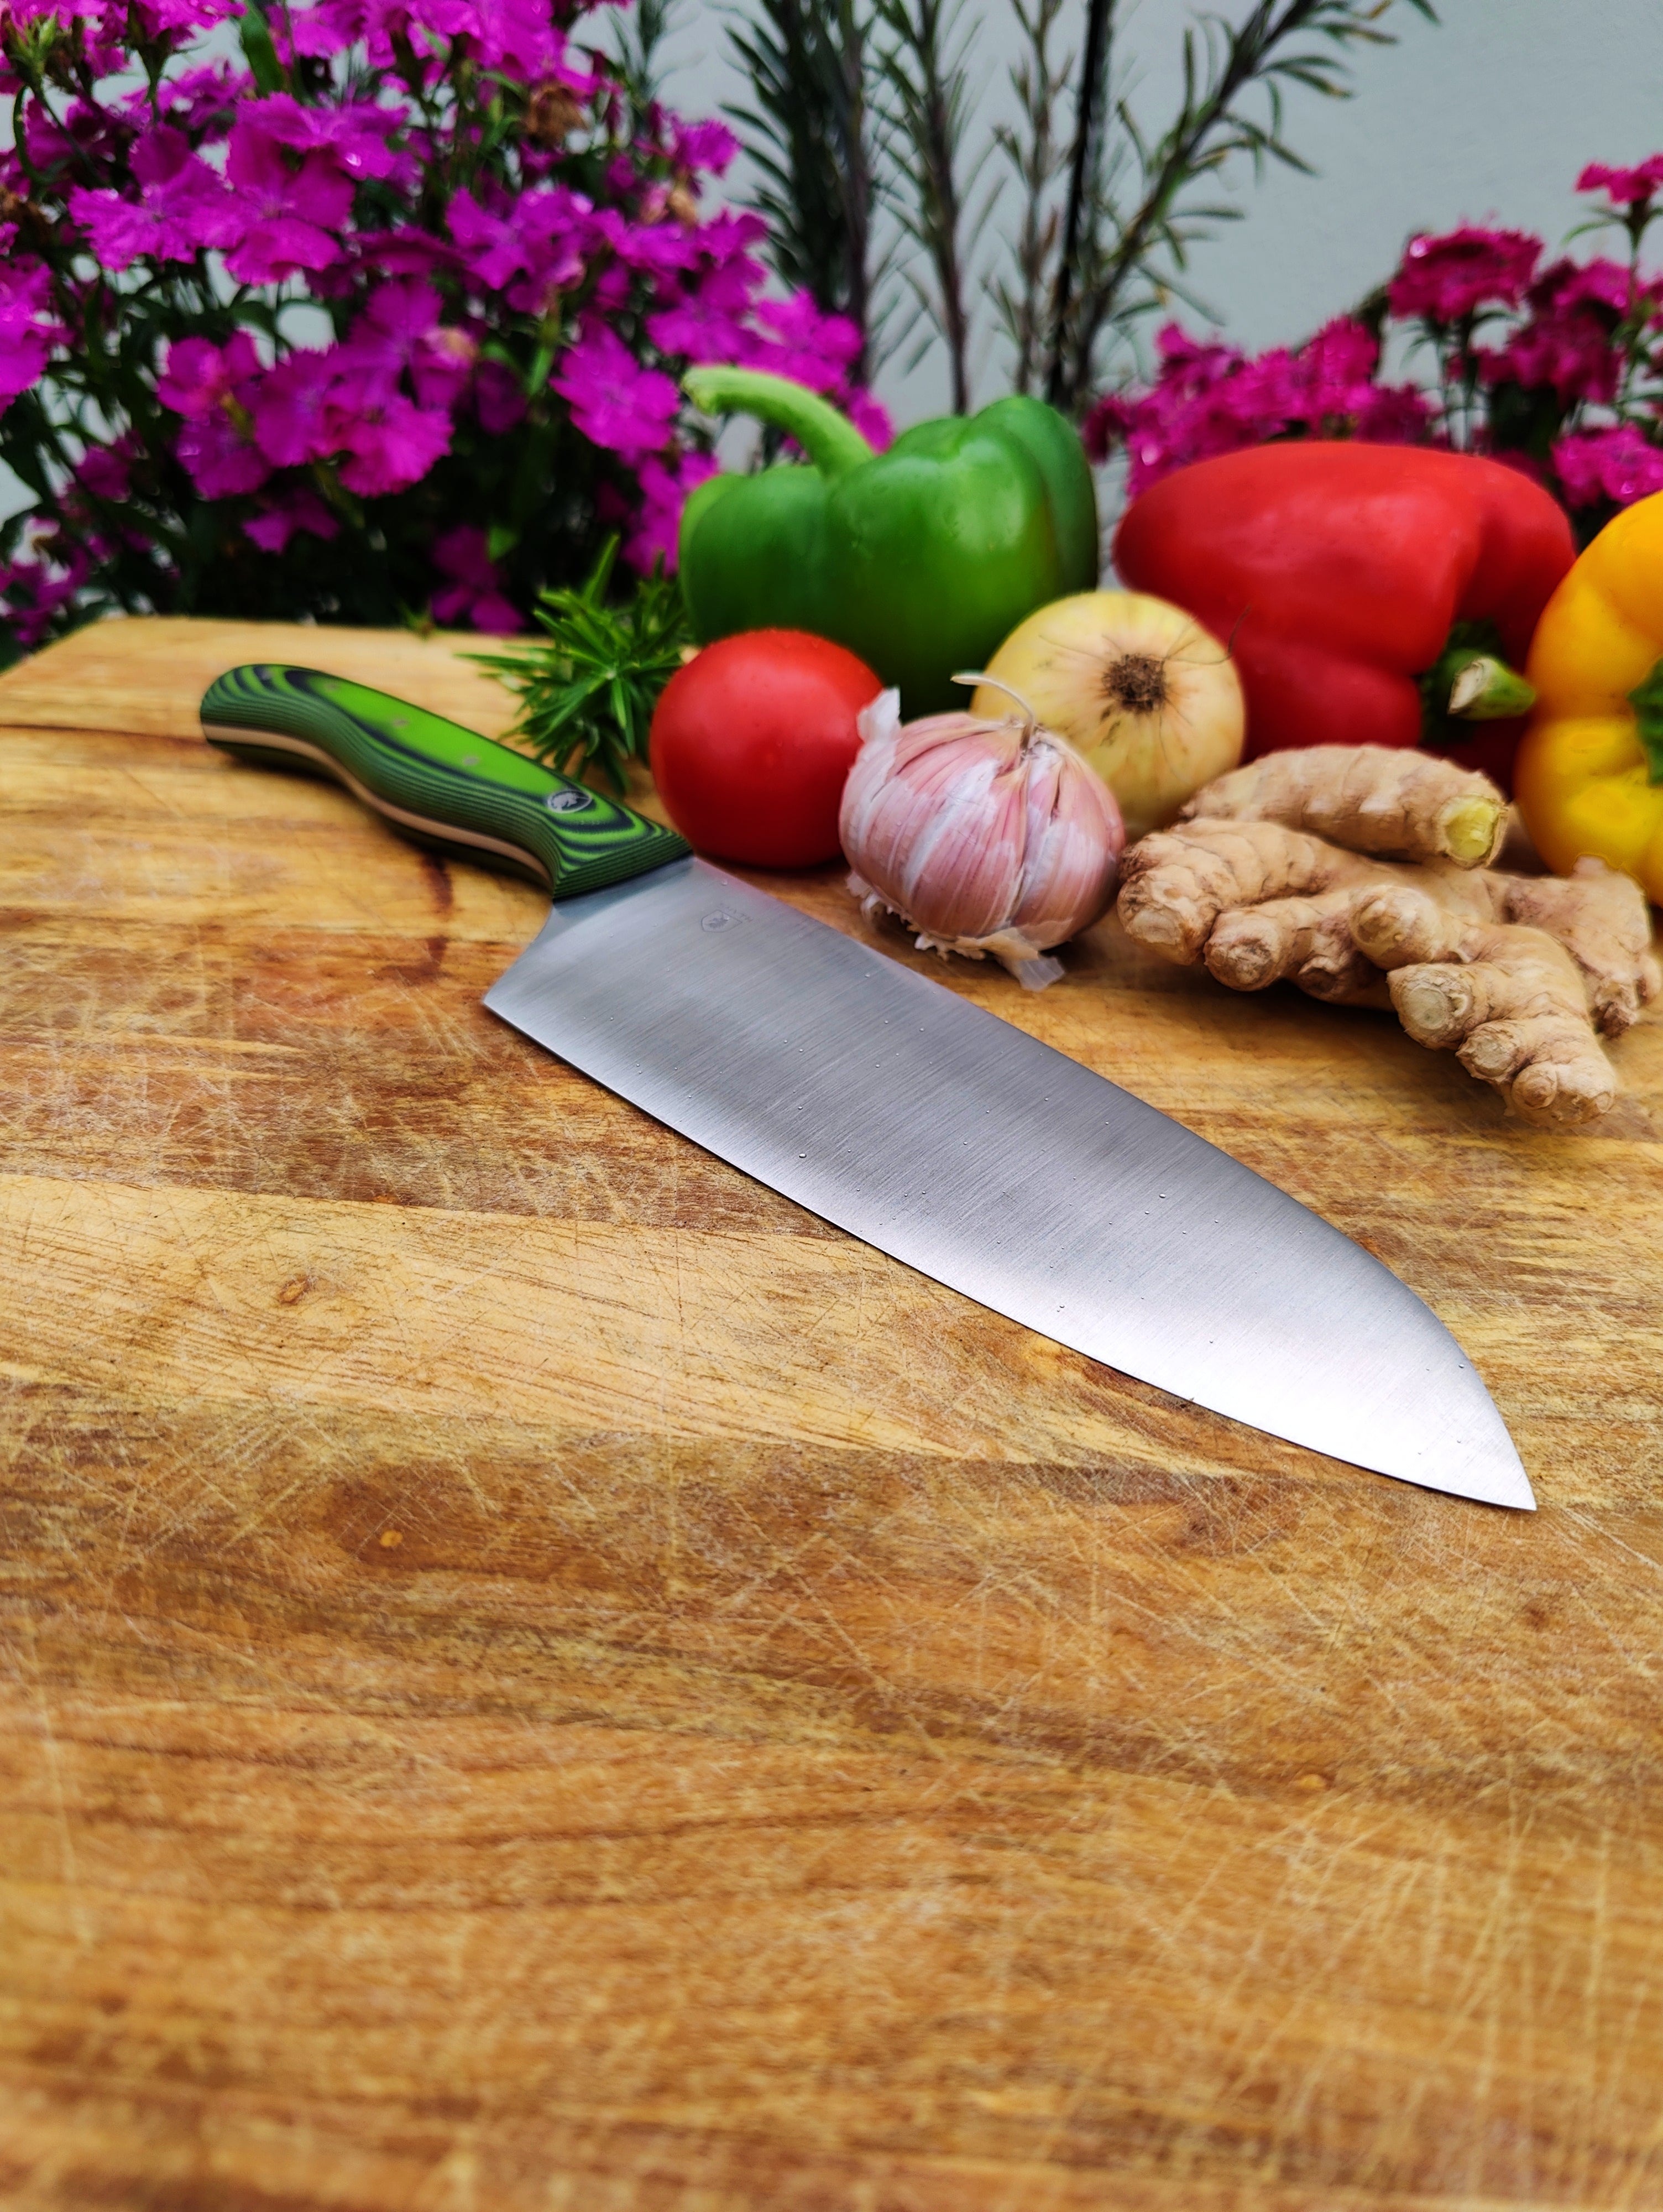 Aeb-l chefs knife ,green & black sure grip handles